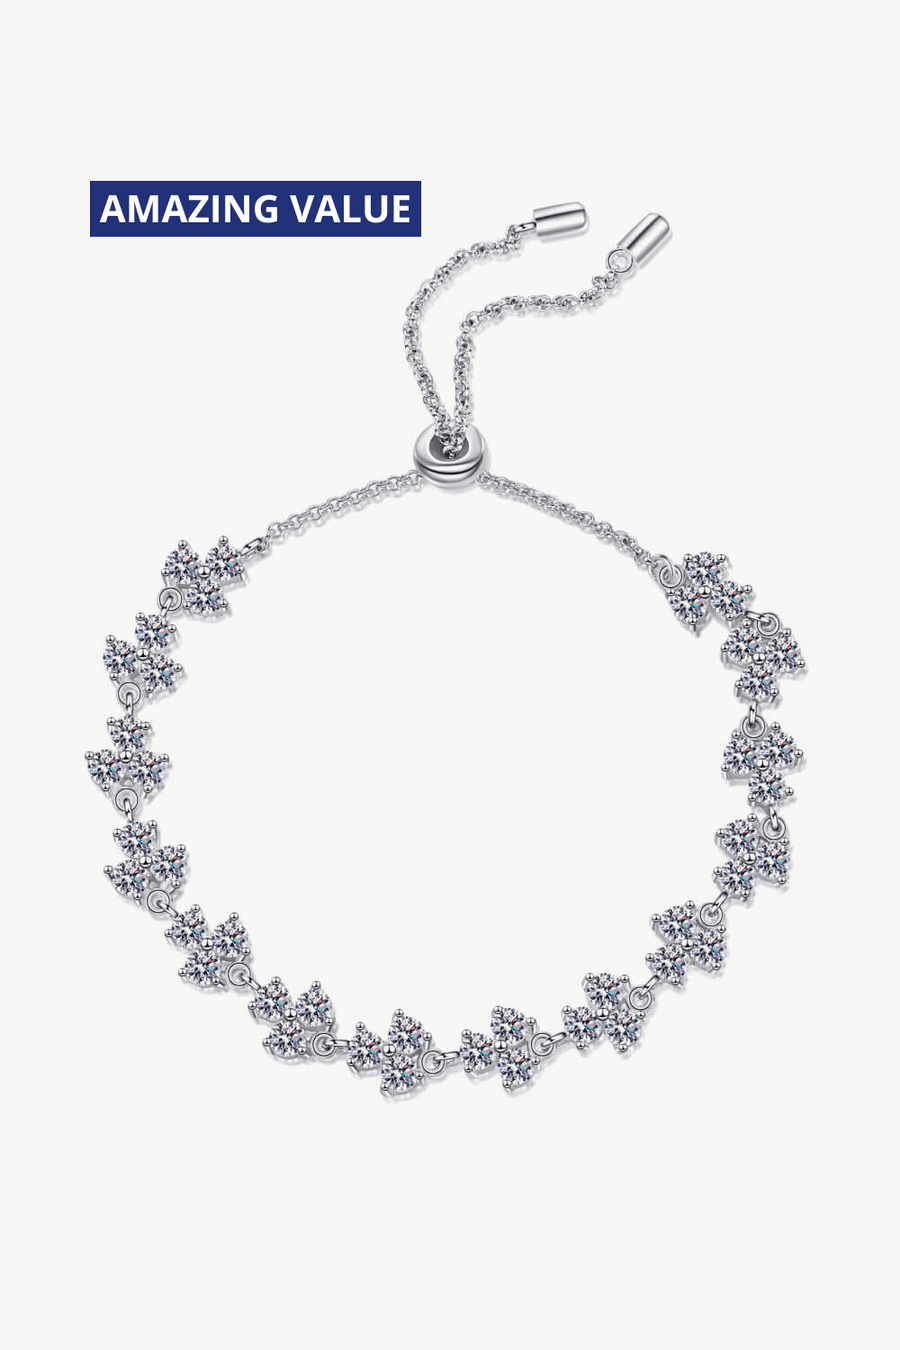 #1 BEST Diamond Chain Bracelet Jewelry Gifts for Women | #1 Best Most Top Trendy Trending 4.2 Carat Diamond Adjustable Bracelet Gift for Women, Ladies, Mother | MASON New York